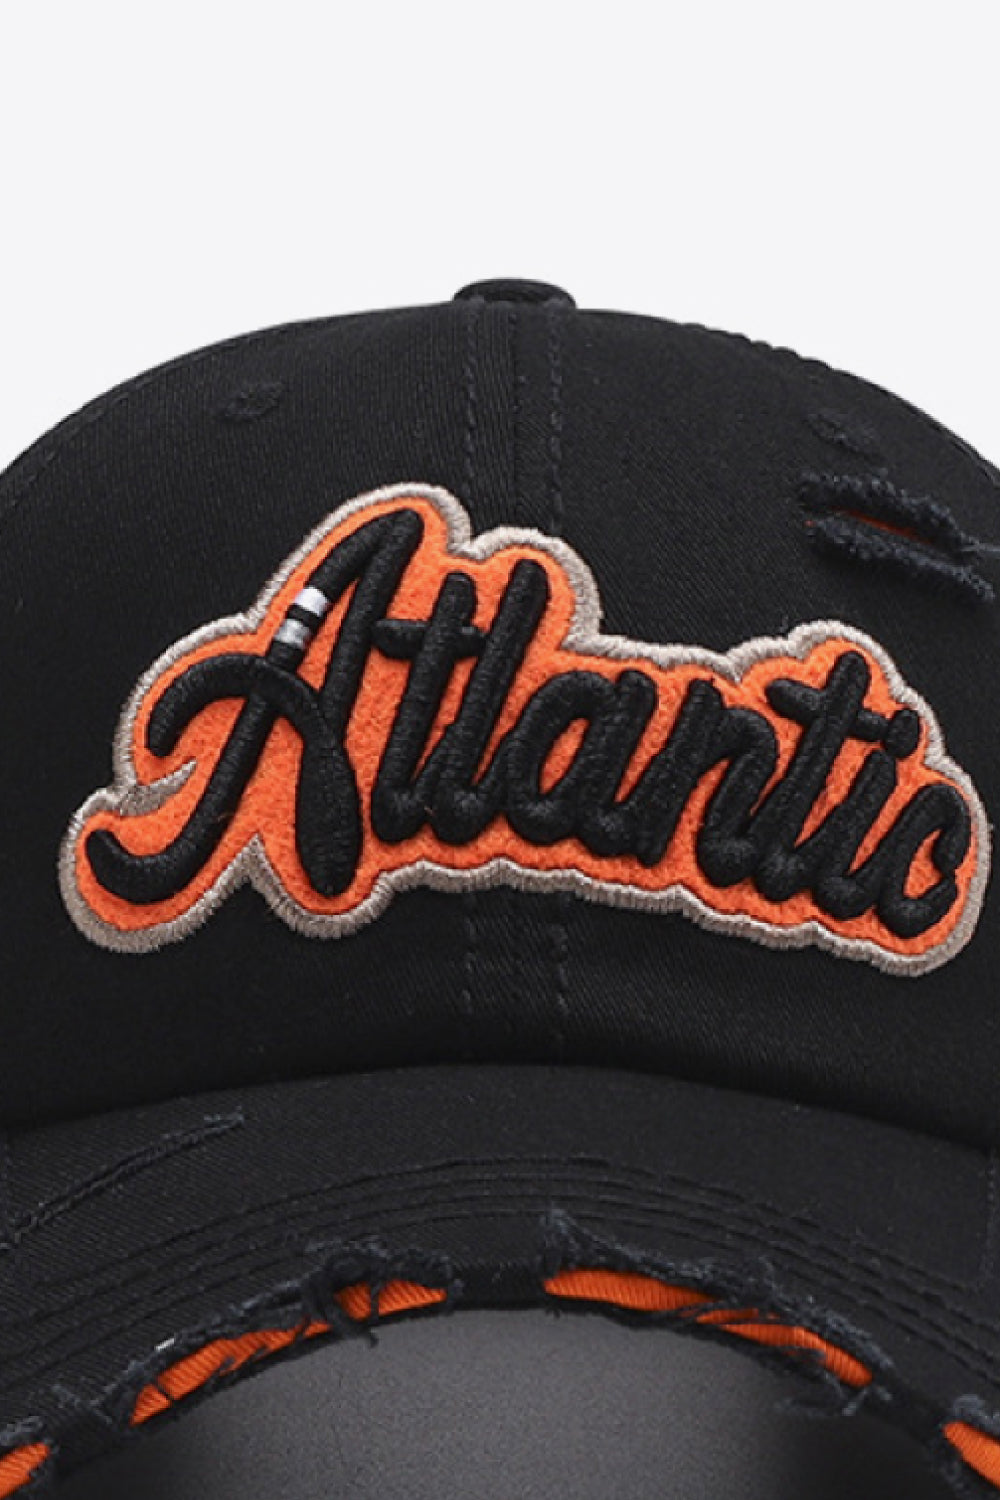 Black Atlantic Unisex Baseball Cap, Gym Accessories, Fitness Accessory 